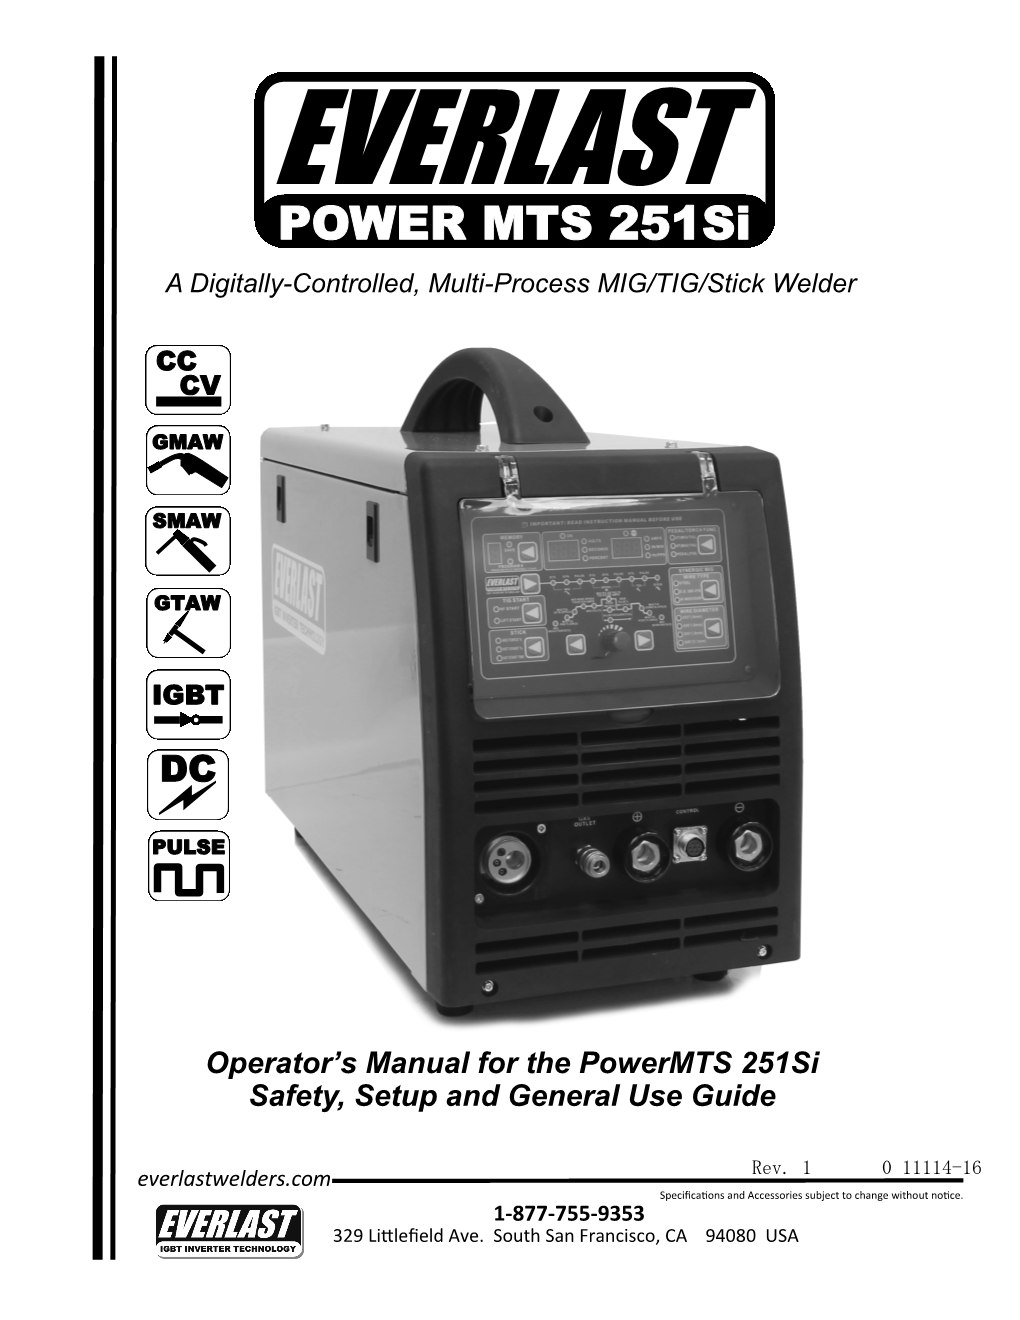 POWER MTS 251Si a Digitally-Controlled, Multi-Process MIG/TIG/Stick Welder